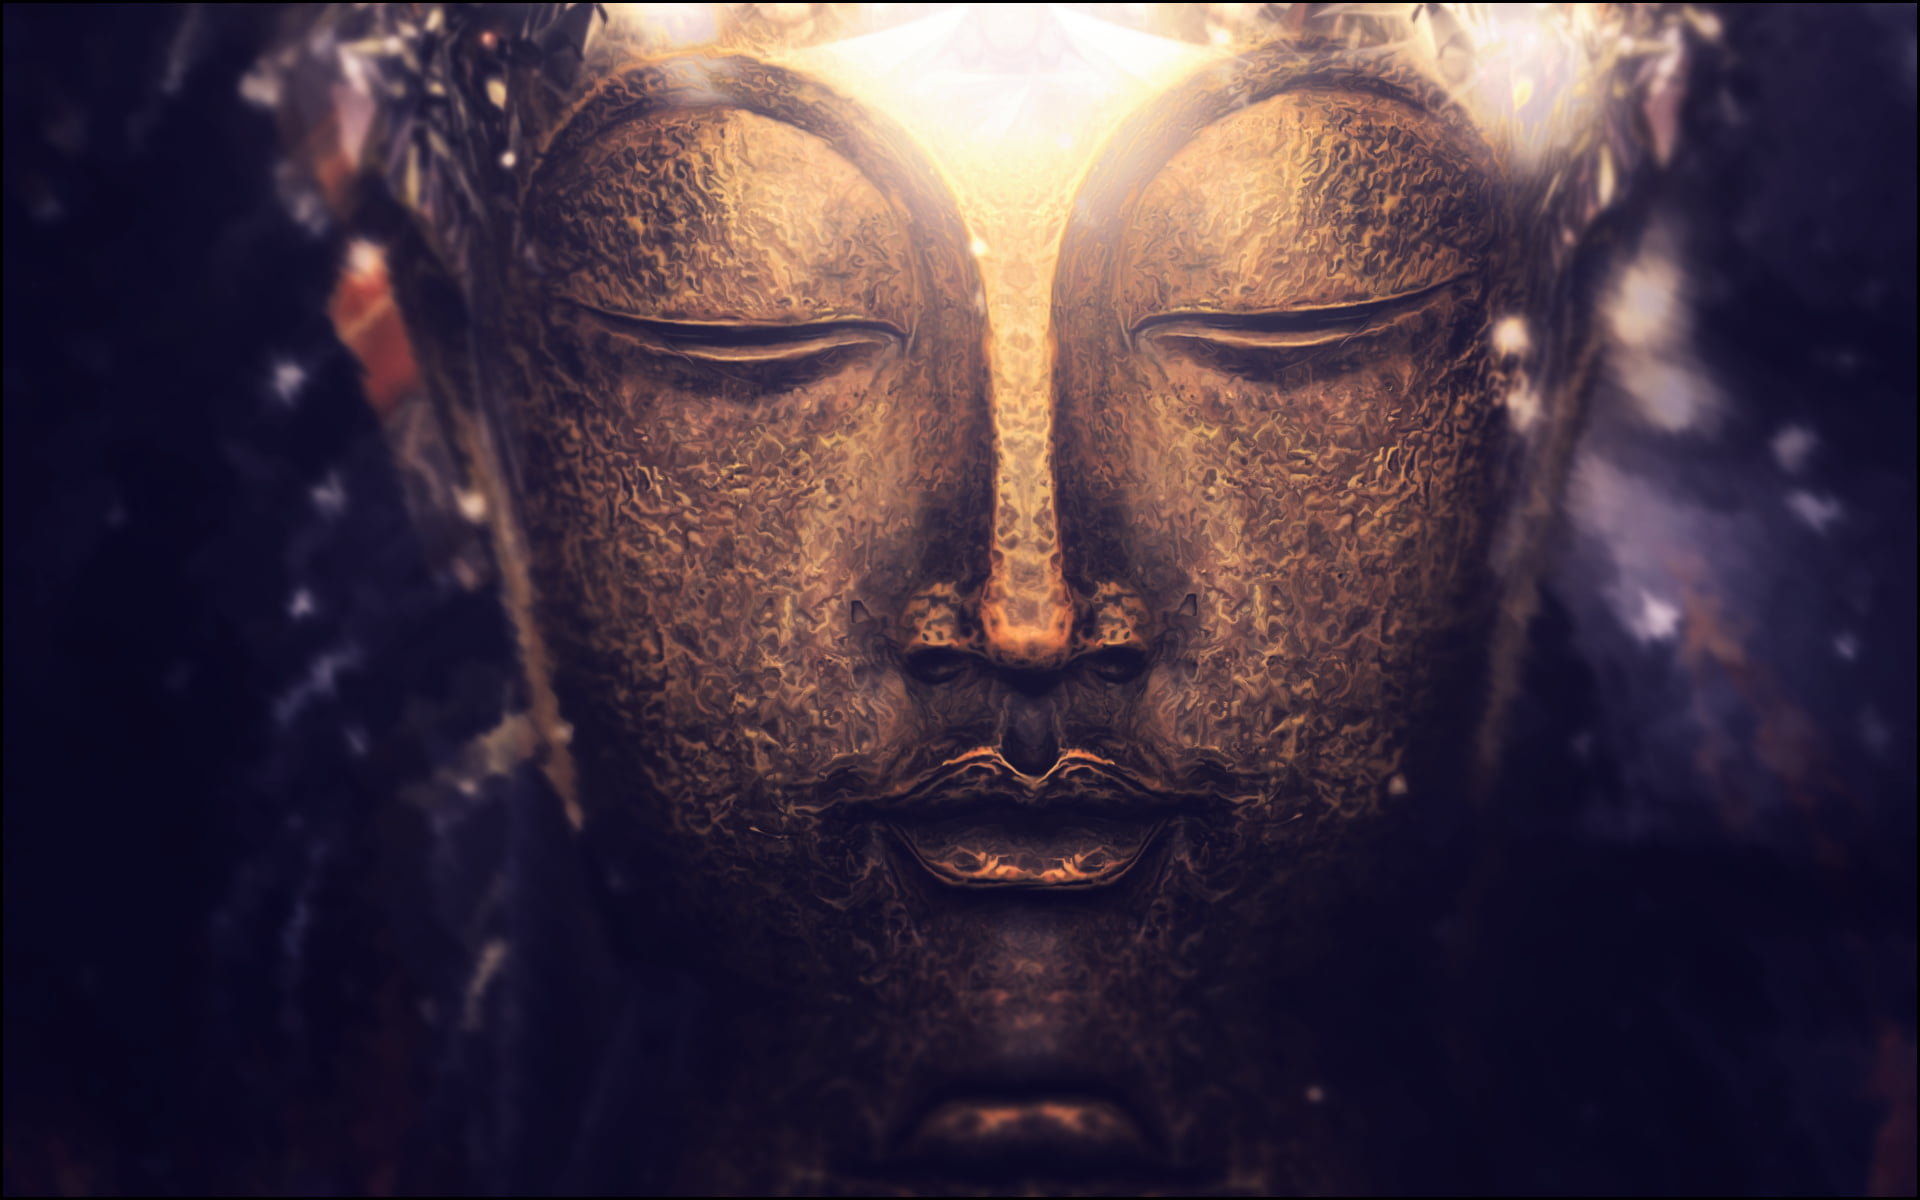 Golden Buddha digital wallpaper, Buddha head bust illustration